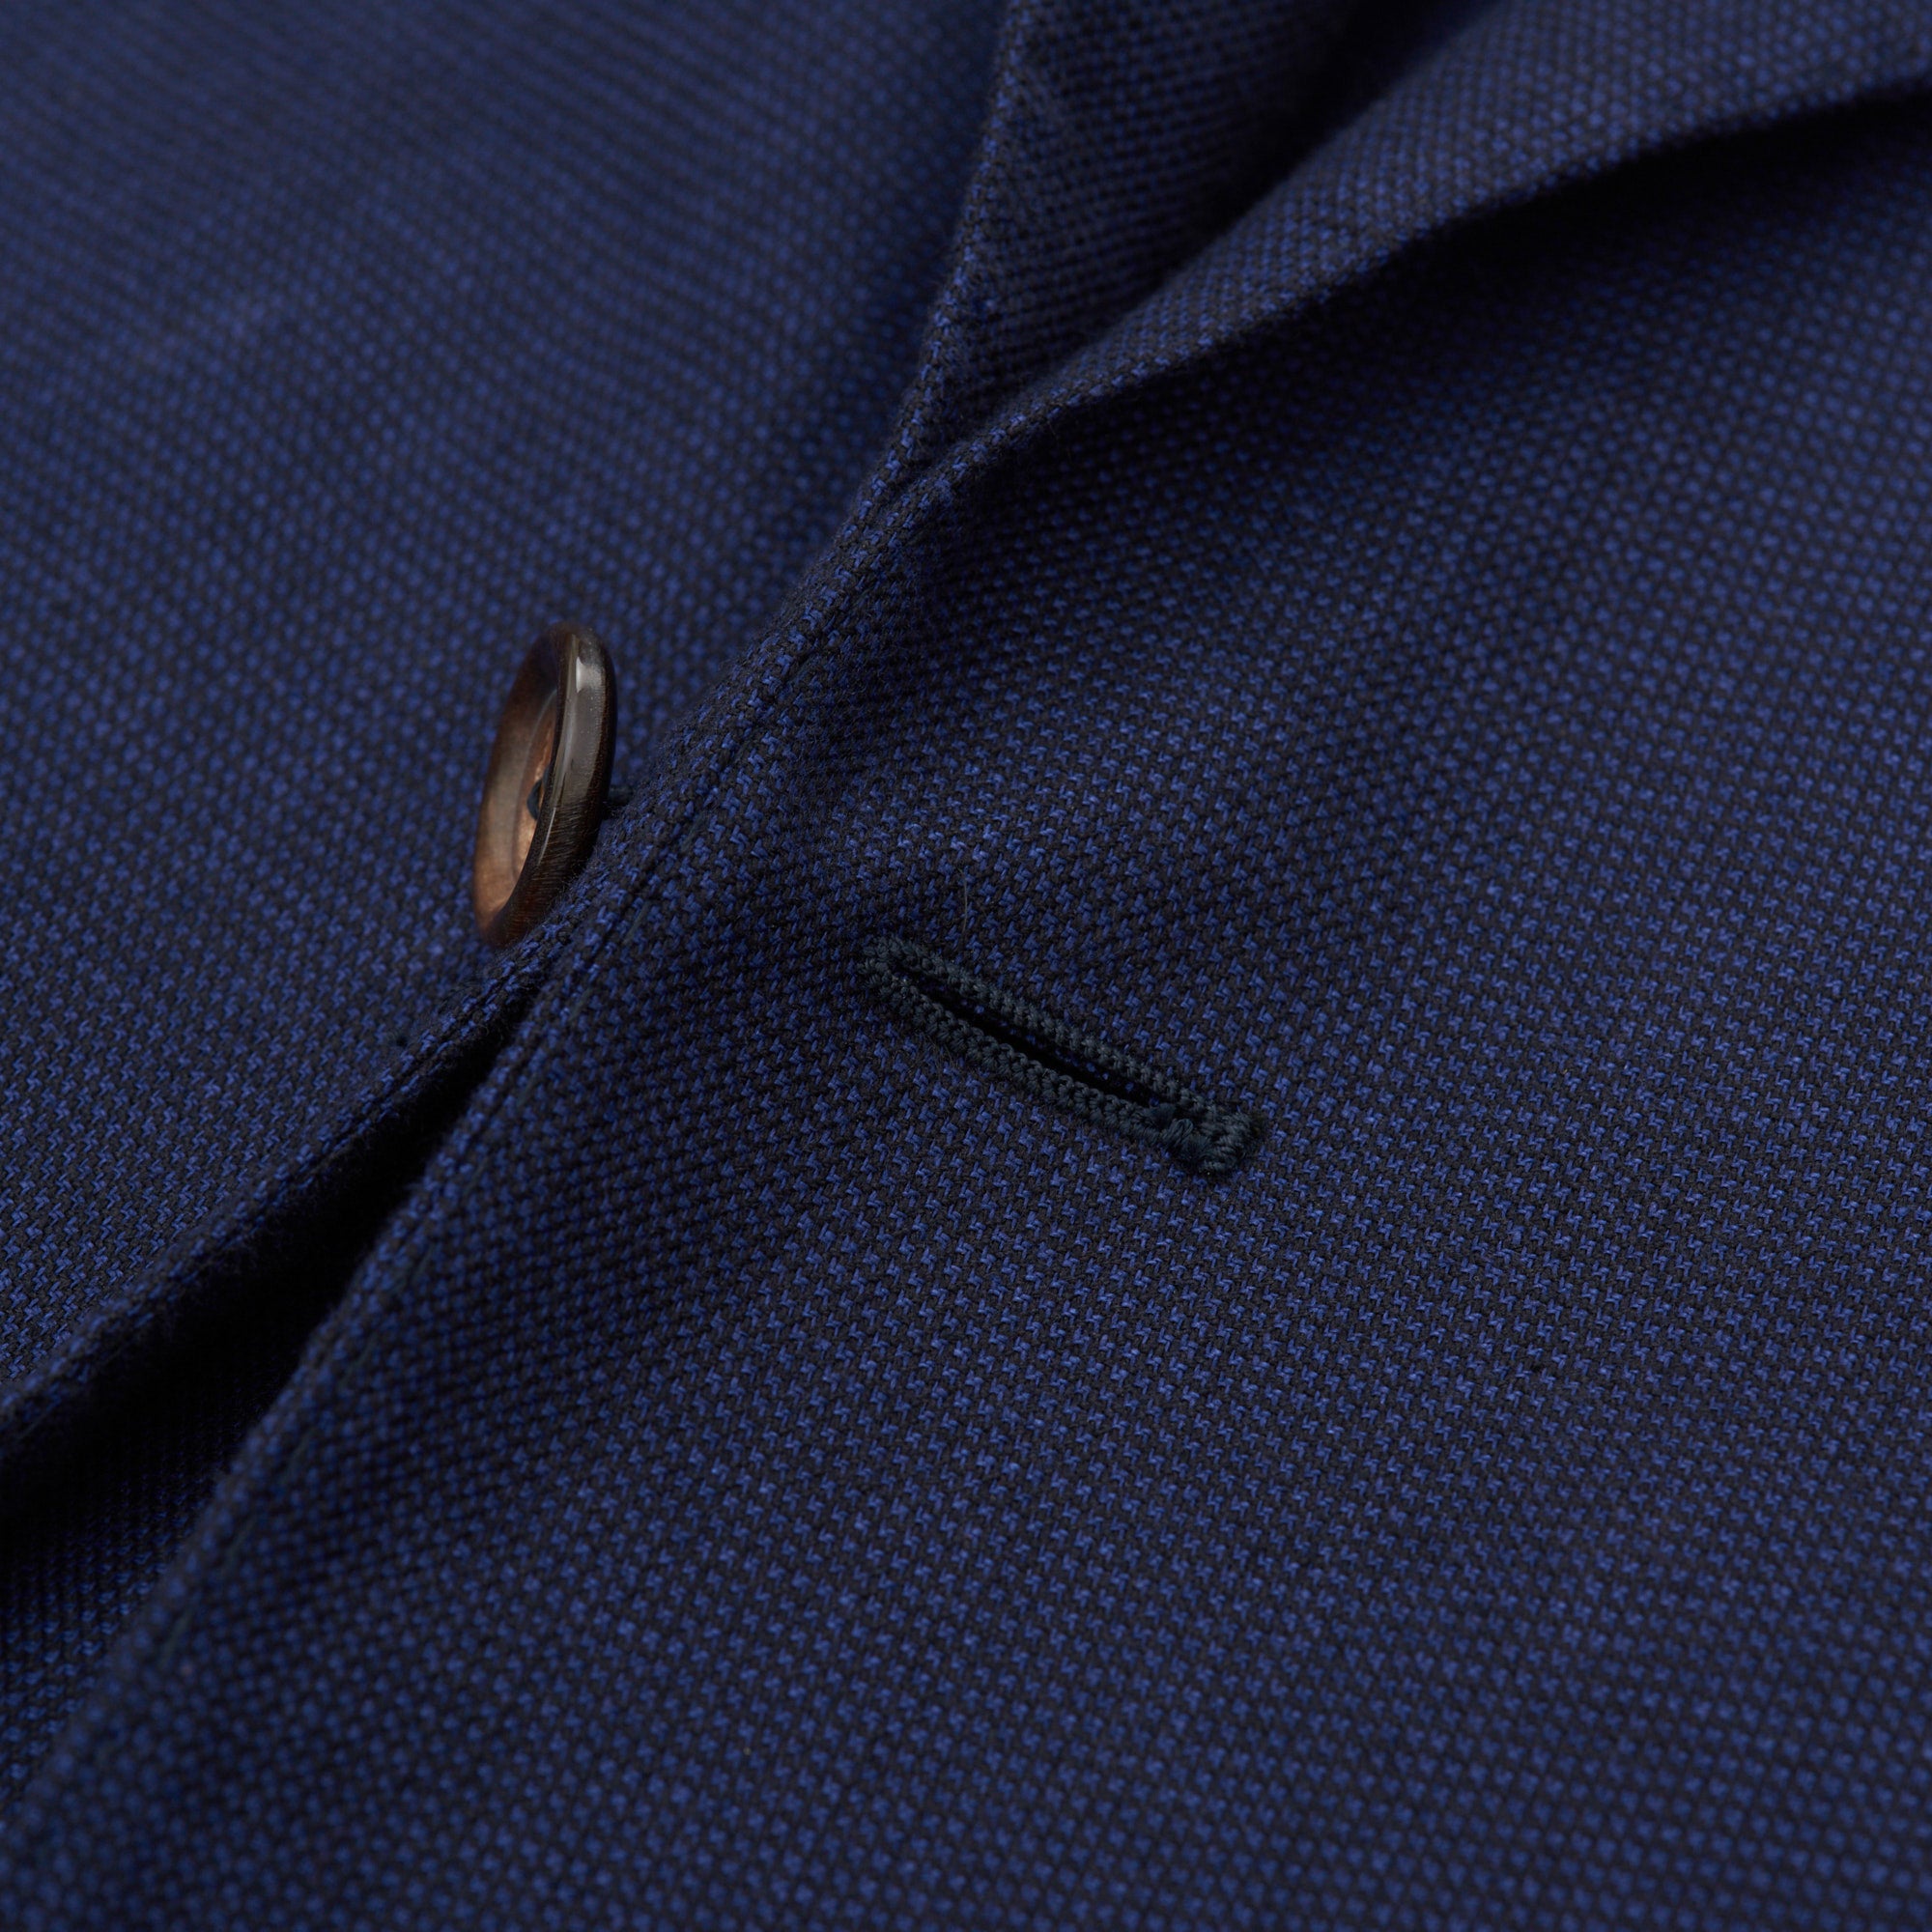 STILE LATINO Napoli Navy Blue Cotton-Linen Sport Coat Jacket EU 48